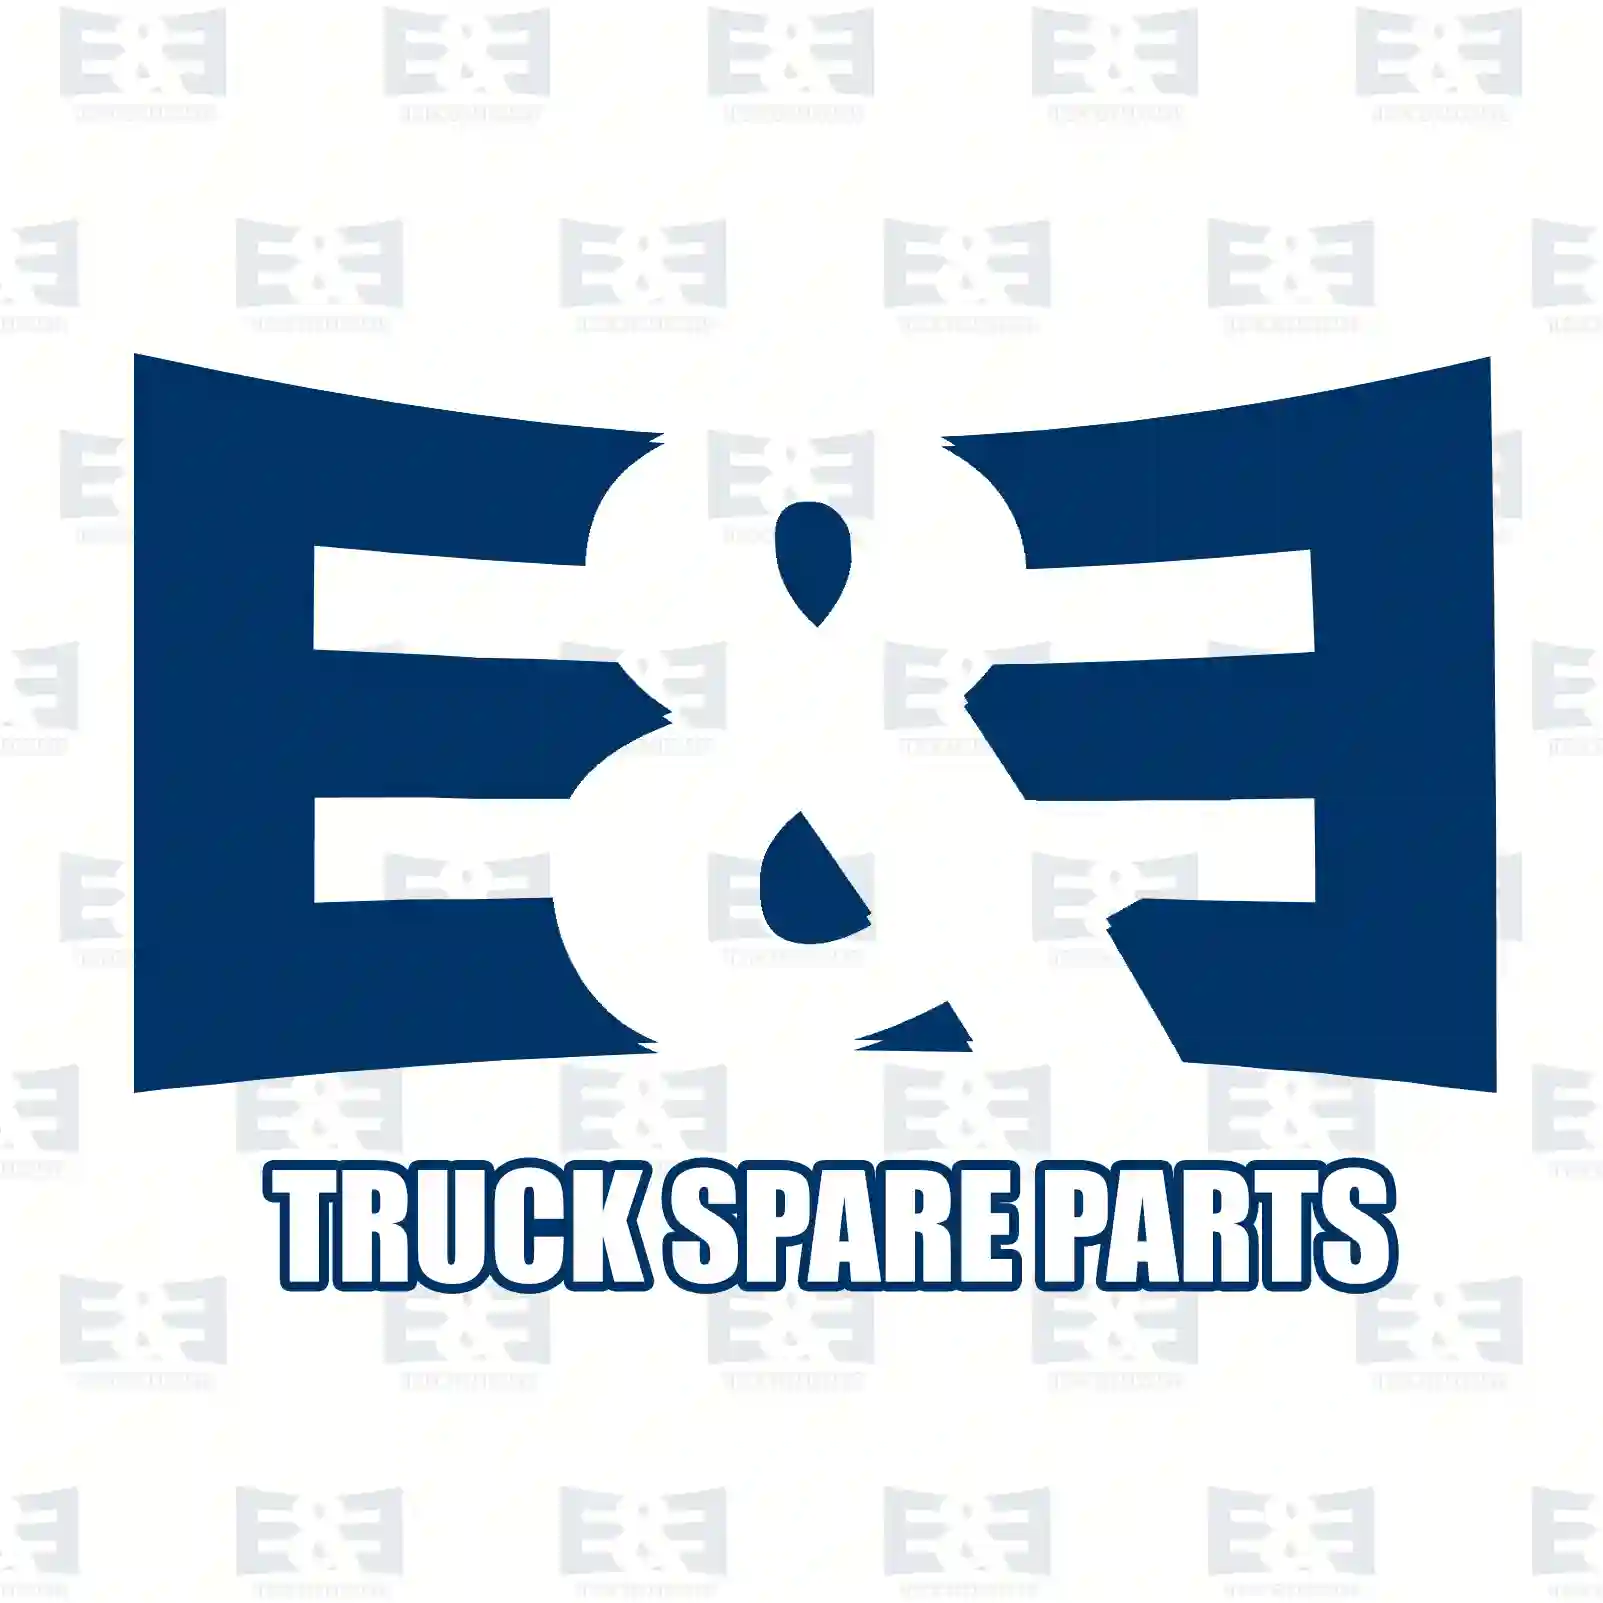 License plate lamp, without bulb, 2E2298006, 9018200156, 2D0943021A, ZG20642-0008 ||  2E2298006 E&E Truck Spare Parts | Truck Spare Parts, Auotomotive Spare Parts License plate lamp, without bulb, 2E2298006, 9018200156, 2D0943021A, ZG20642-0008 ||  2E2298006 E&E Truck Spare Parts | Truck Spare Parts, Auotomotive Spare Parts